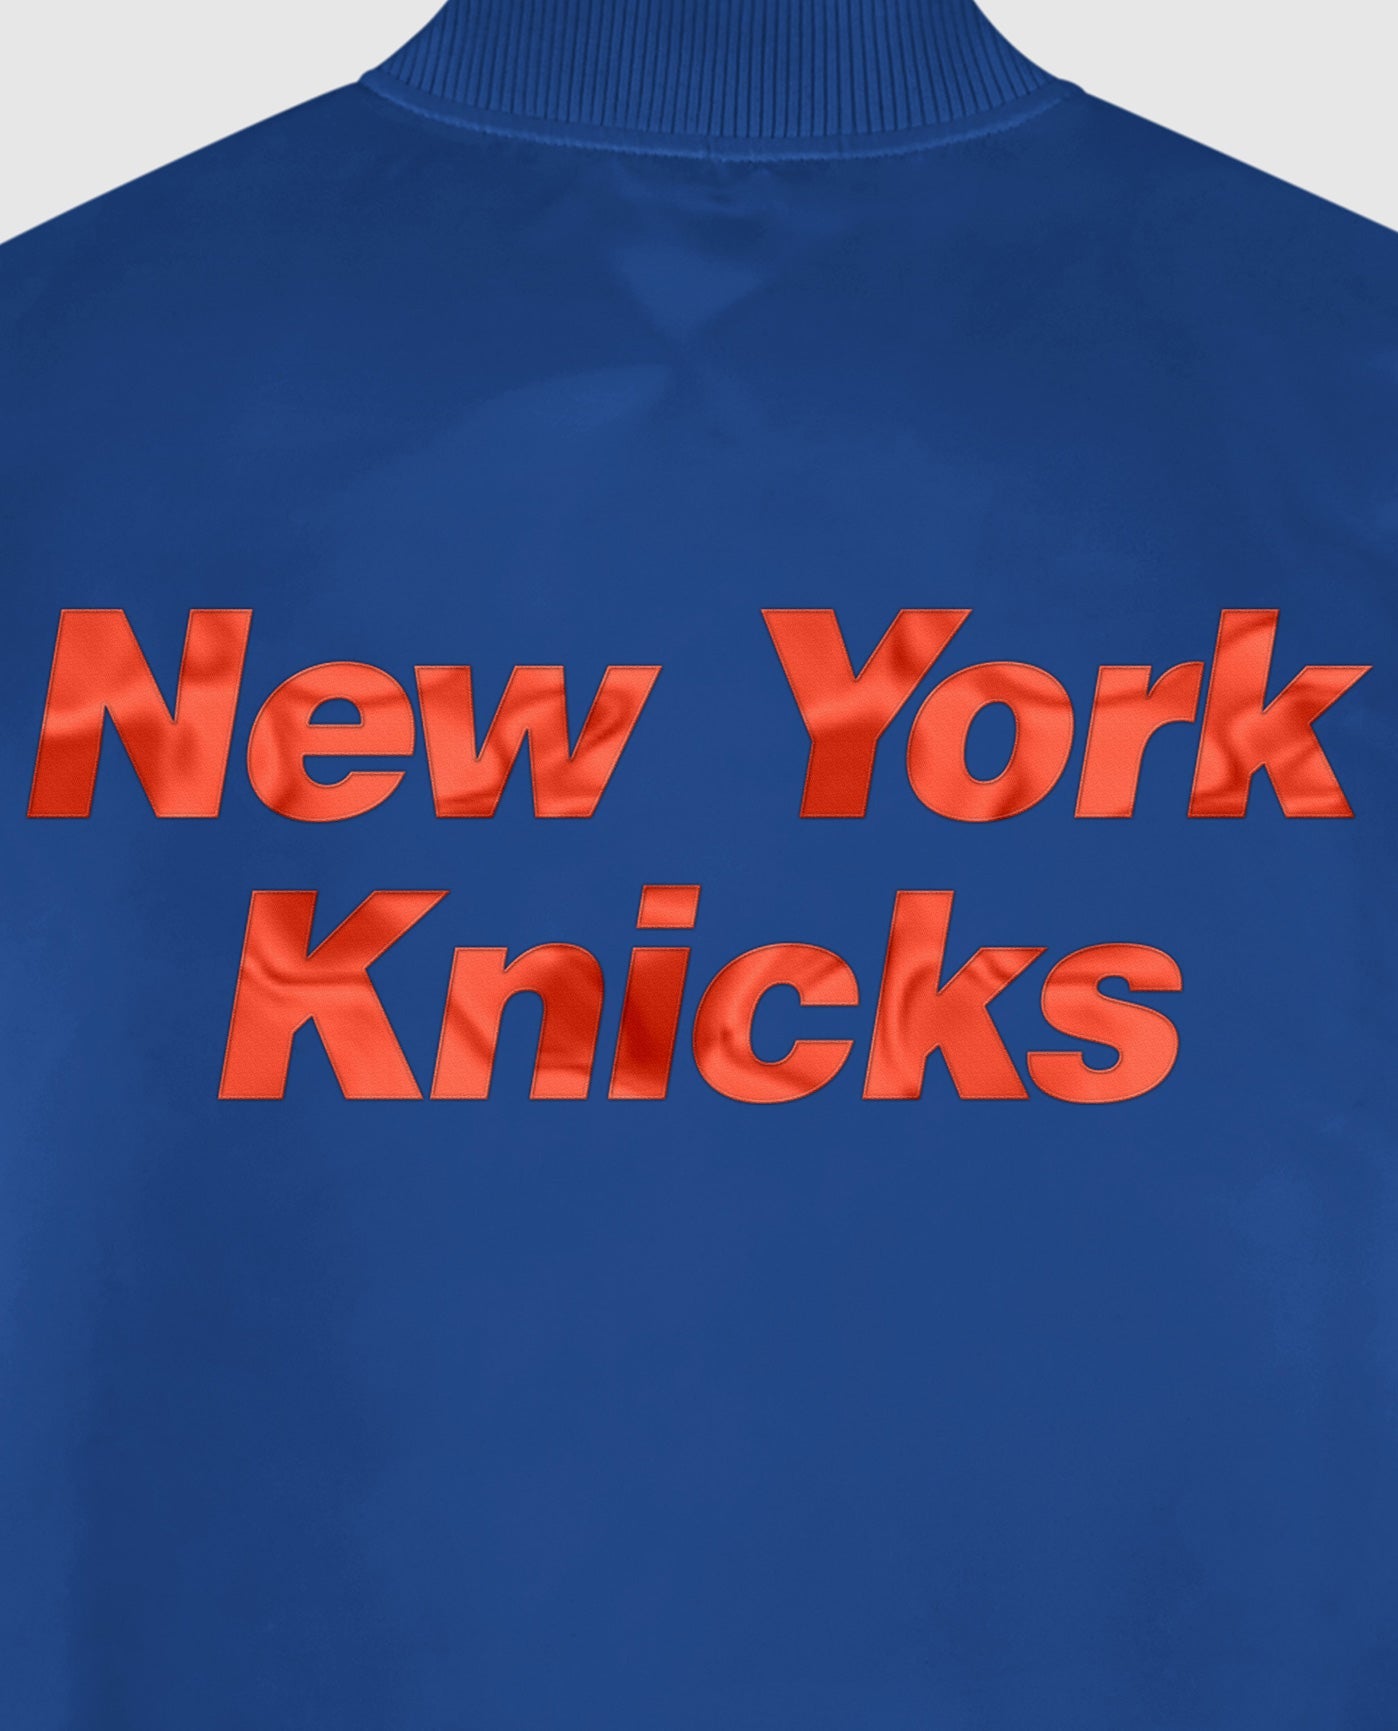 Starter New York Knicks jacket Size L - $31 - From Jordyn